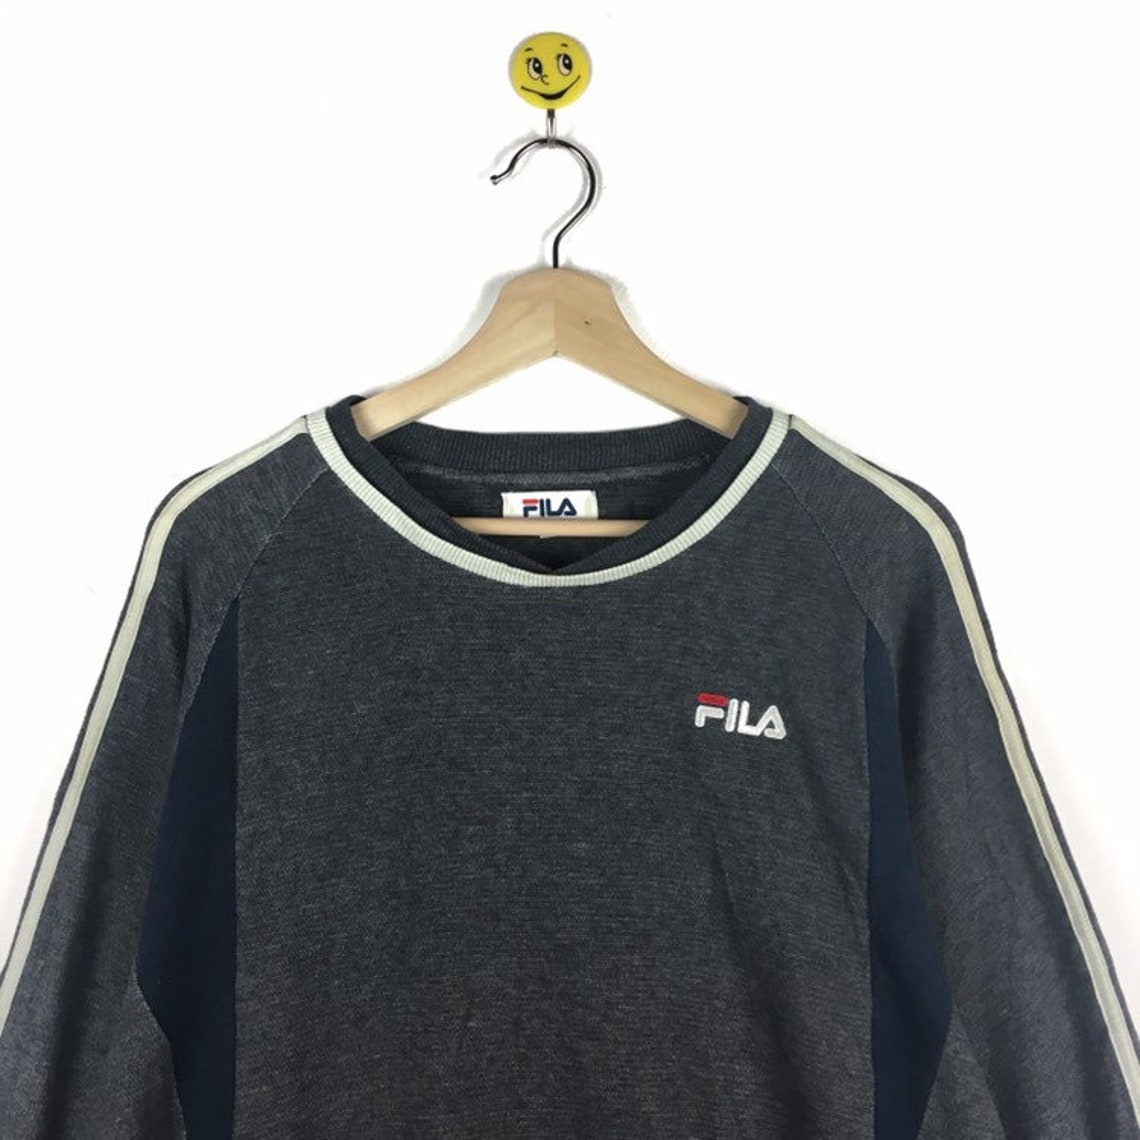 Rare Fila Sweatshirt fila pullover fila sweater shirt jacket | Etsy